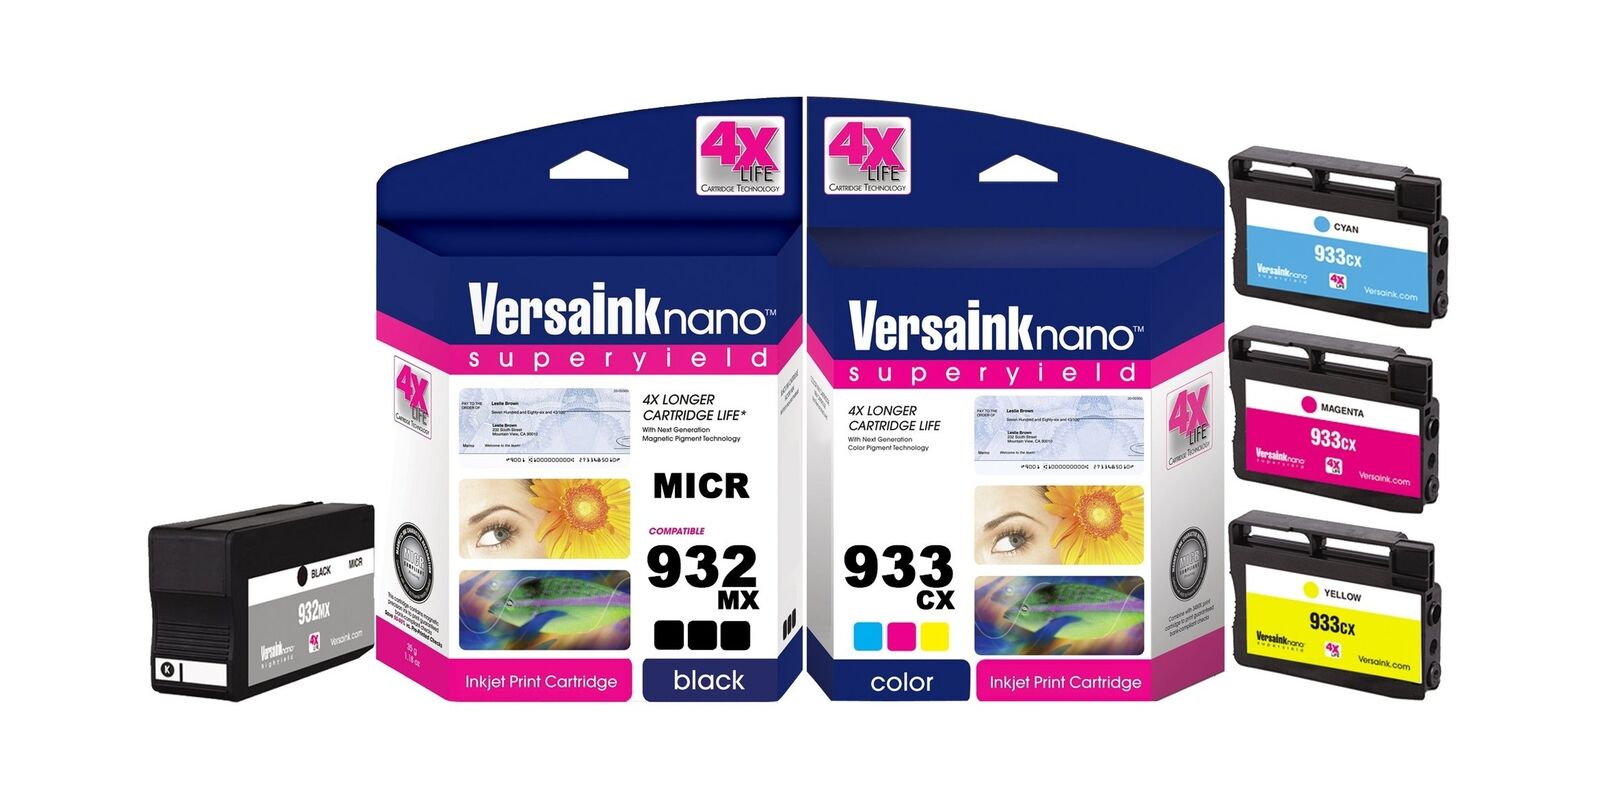 VersaInk-nano HP 932 MX Black MICR Ink Cartridge for Check Printing & 933 CX ...